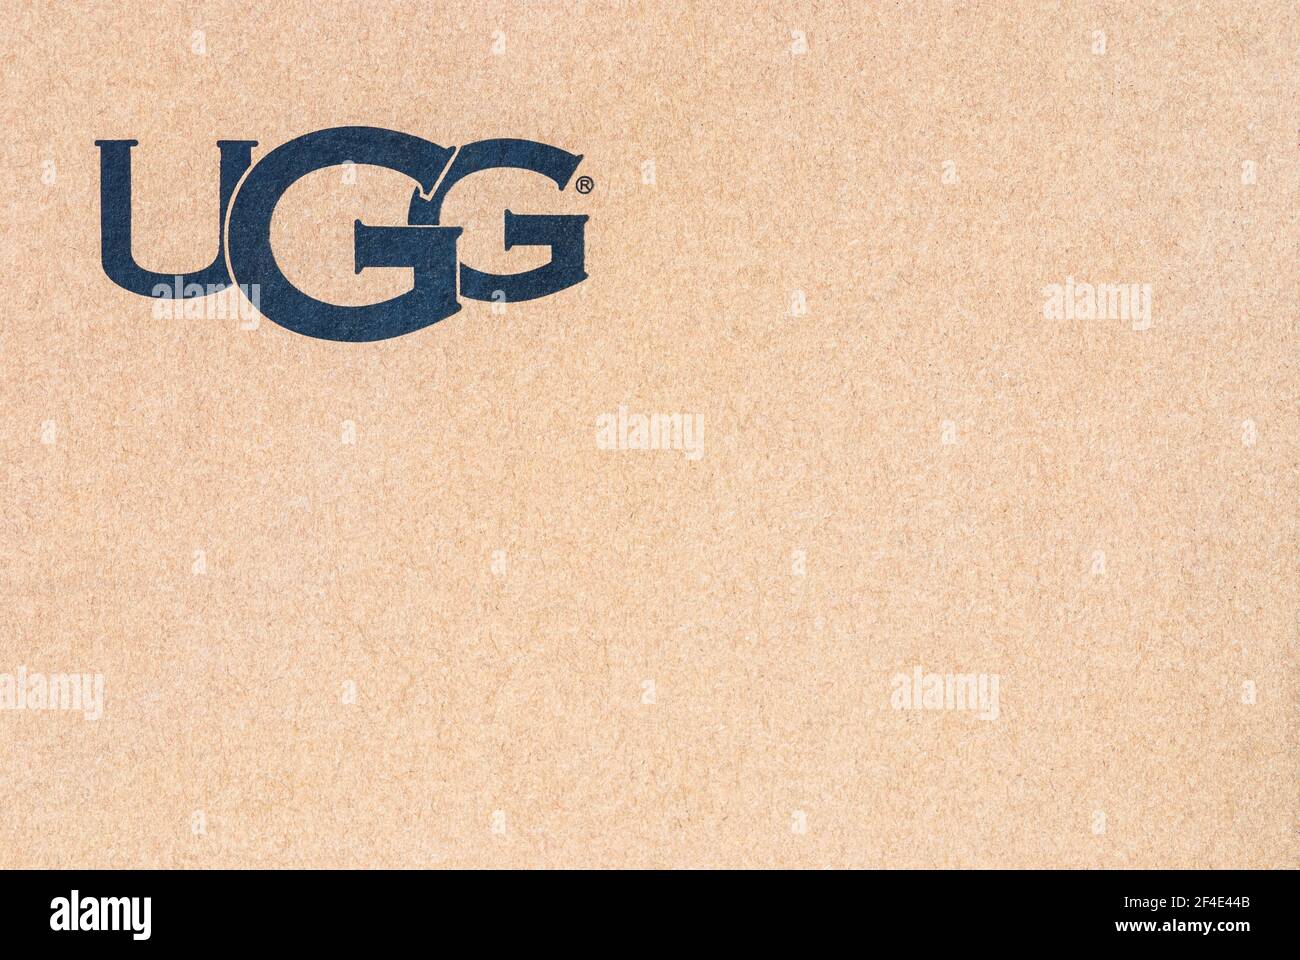 UGG Schuhfirma Logo auf Karton Schuhkarton, Moskau, 13. März 2021  Stockfotografie - Alamy